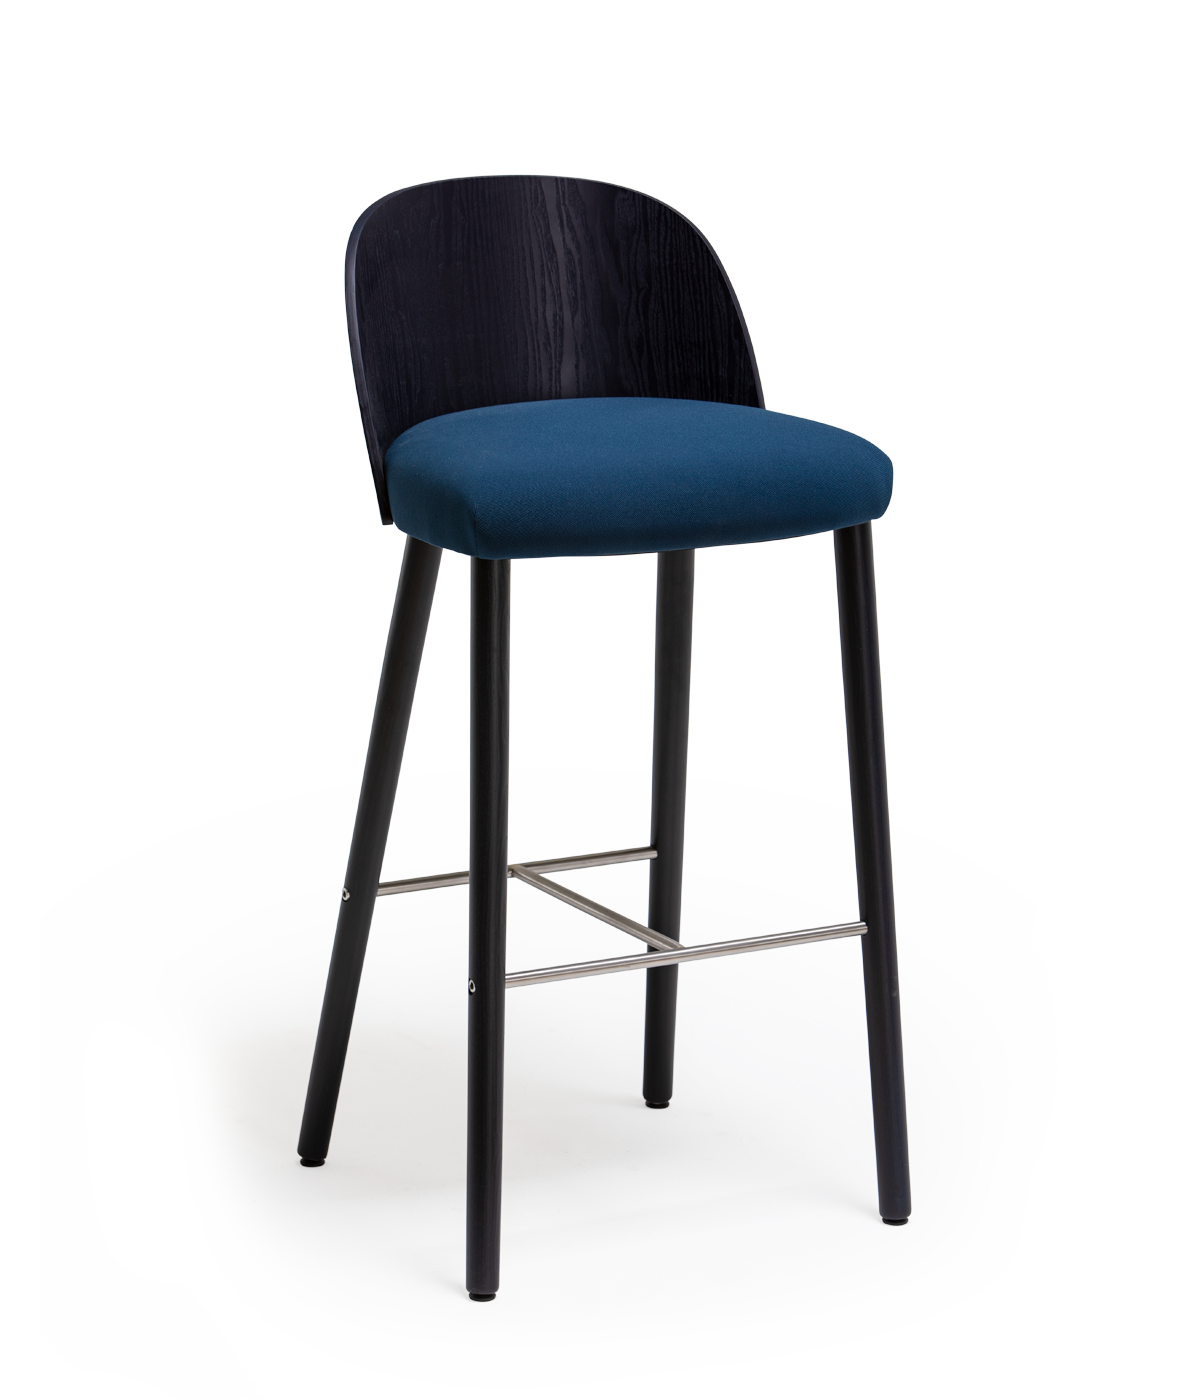 Vergés - Cistell Slim high stool with wooden legs